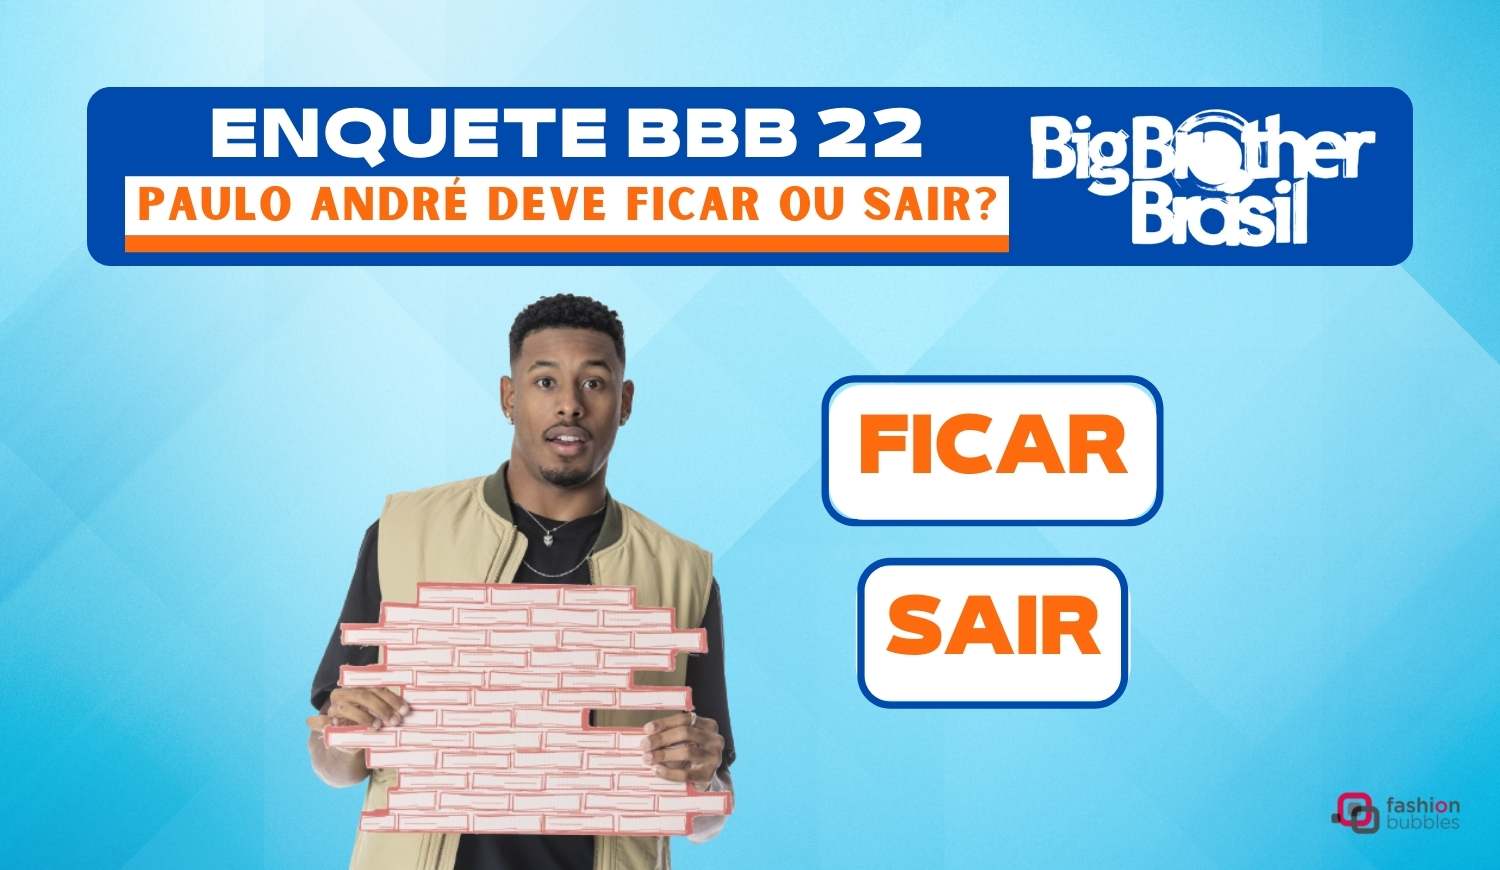 Enquete BBB 22: vote para Paulo André ficar ou sair + quem é o brother